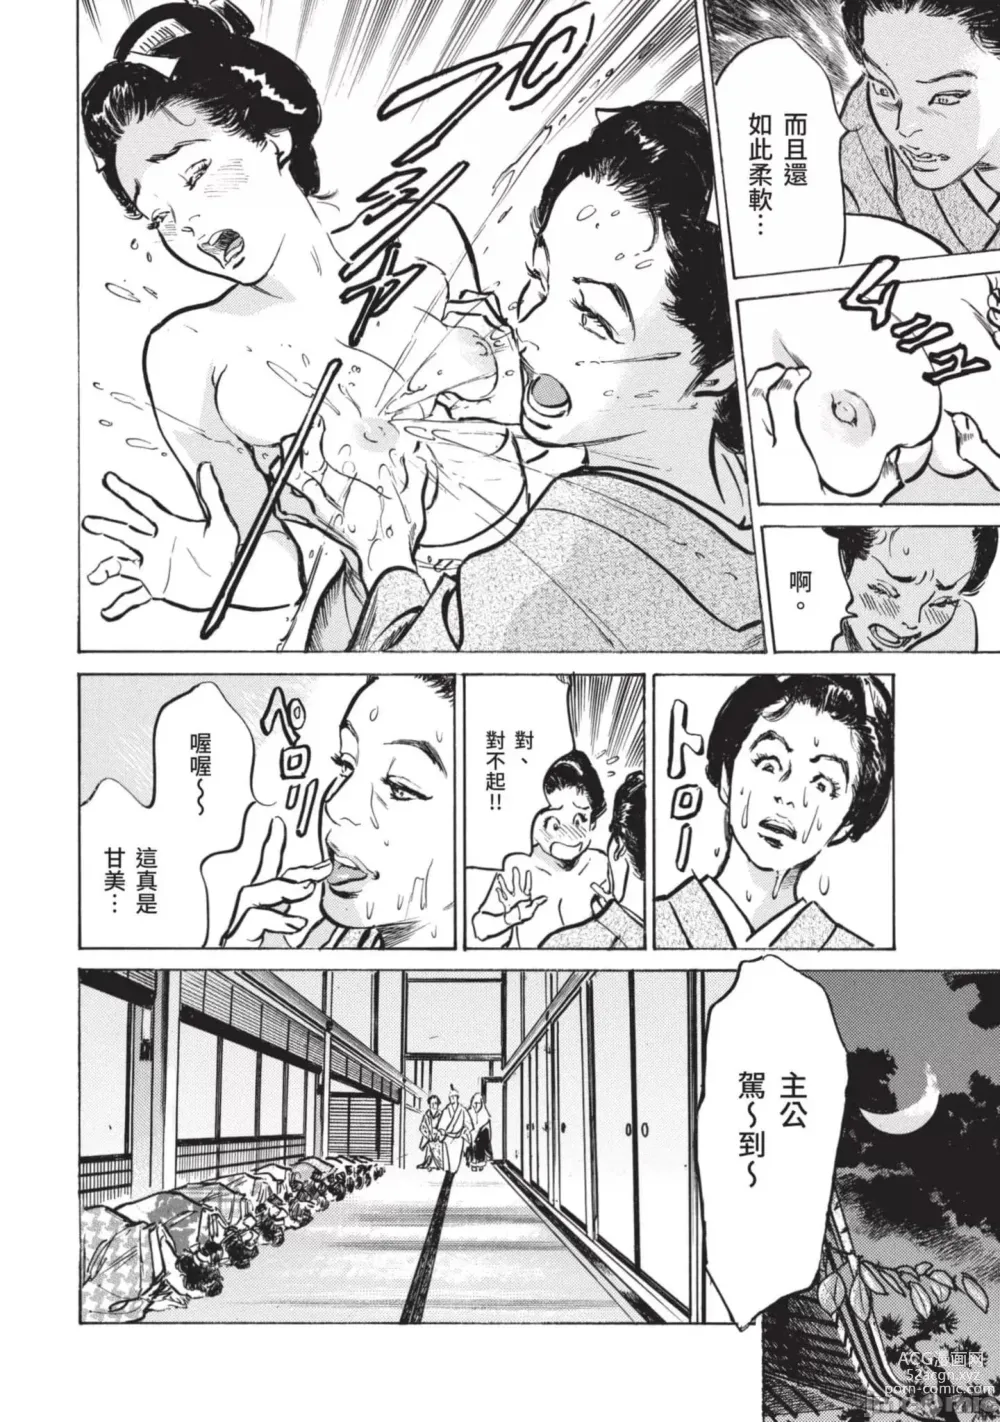 Page 9 of manga Inshuu Hiroku Midare Mandara 2